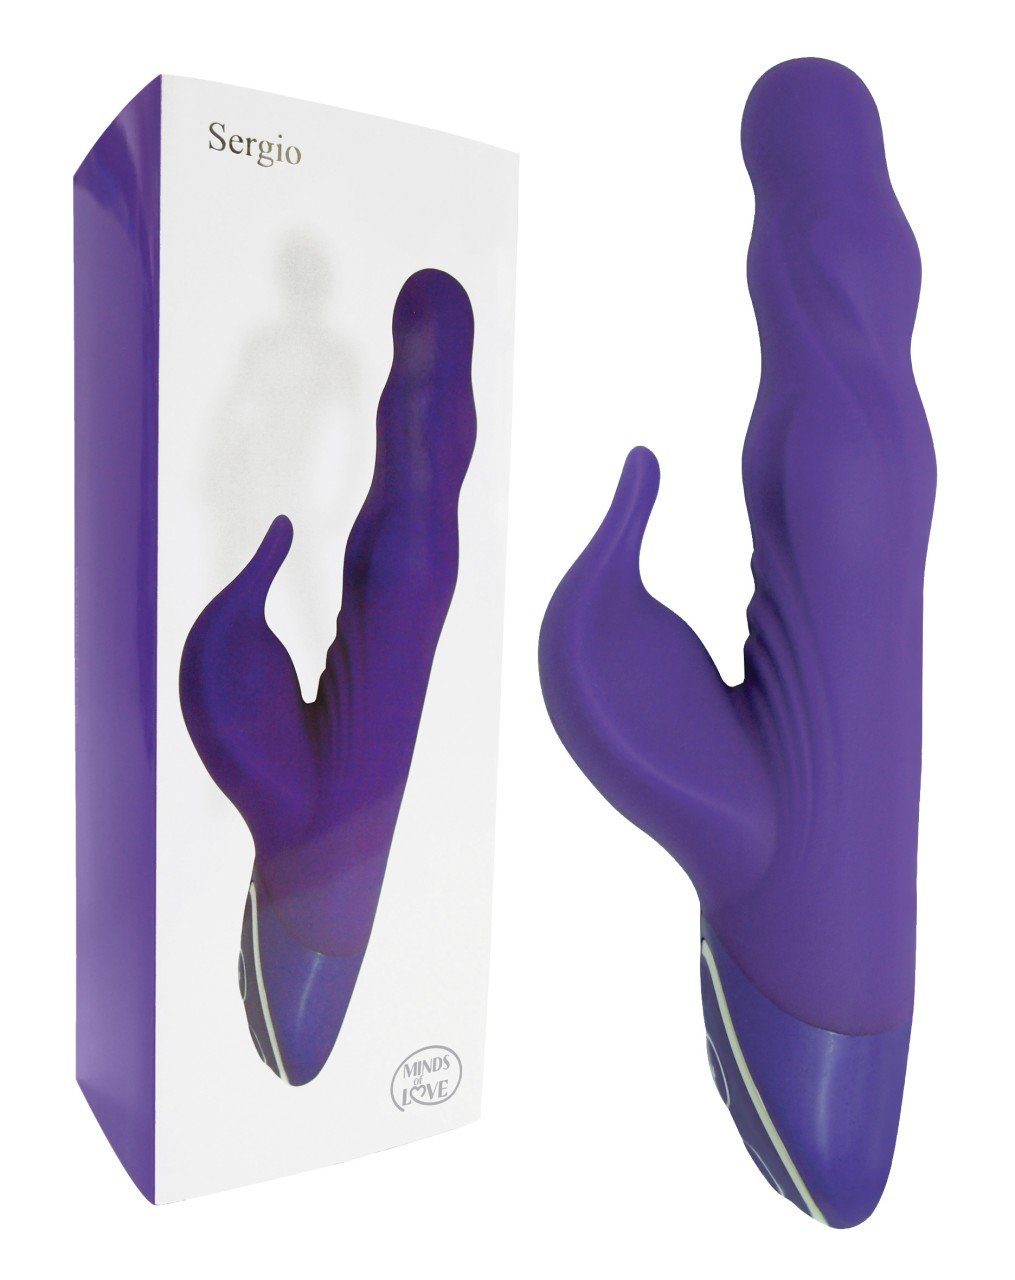 Rabbit-Vibrator purple MINDS LOVE of Sergio LOVE of MINDS